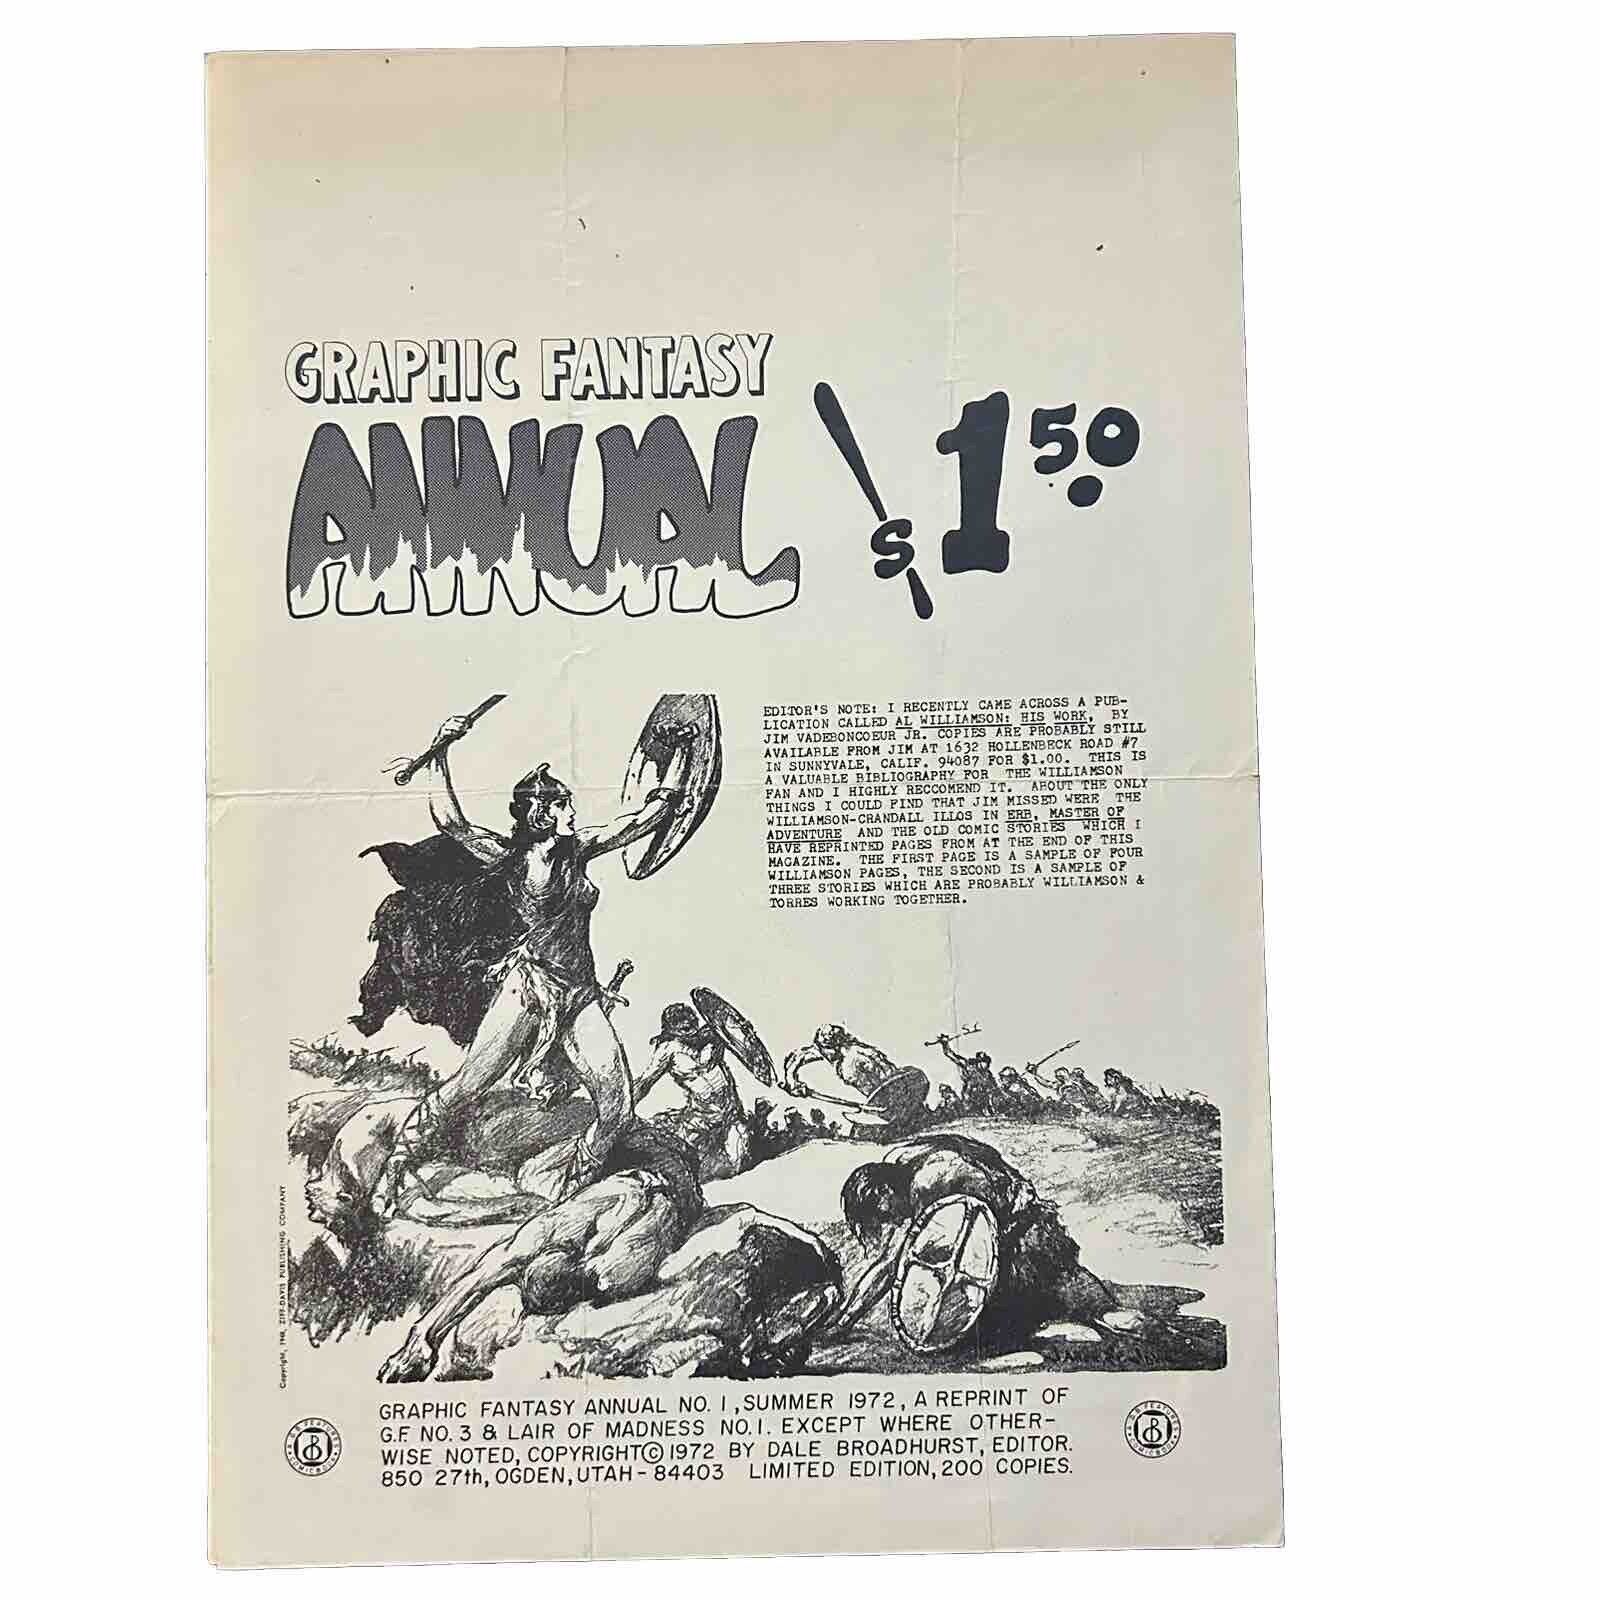 Graphic Fantasy Annual No. 1, Summer 1972